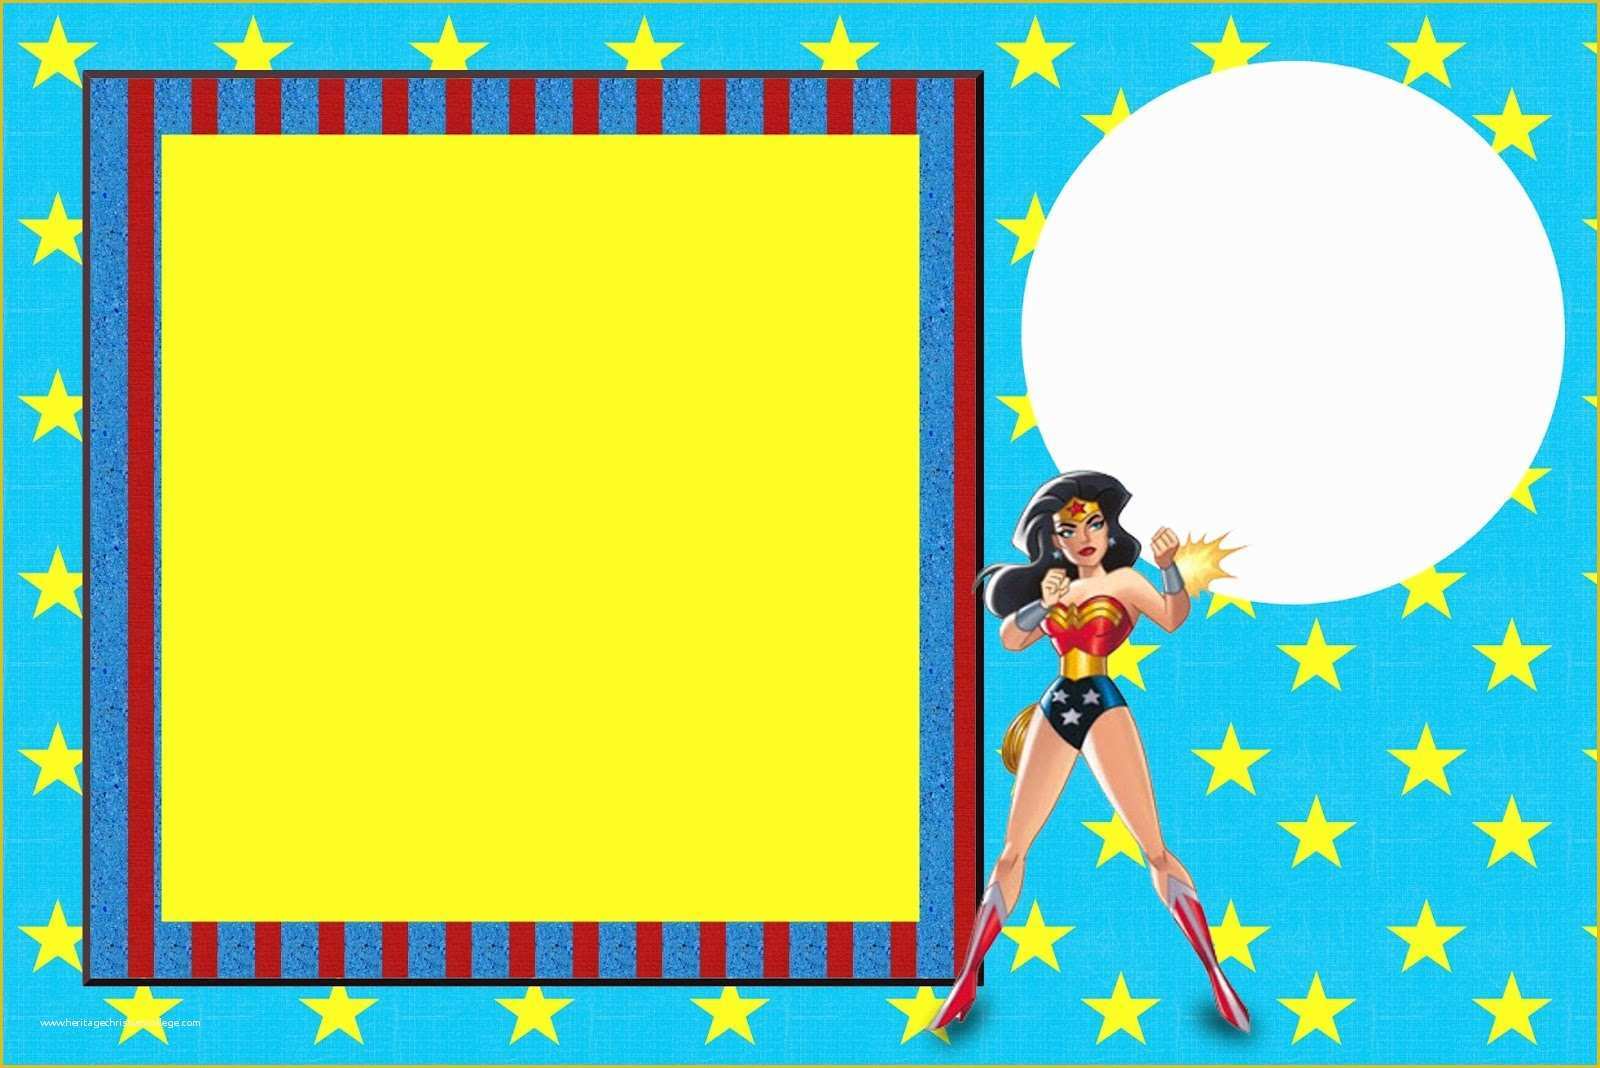 Free Wonder Woman Invitation Template Of Wonder Woman Free Printable Invitations Oh My Fiesta